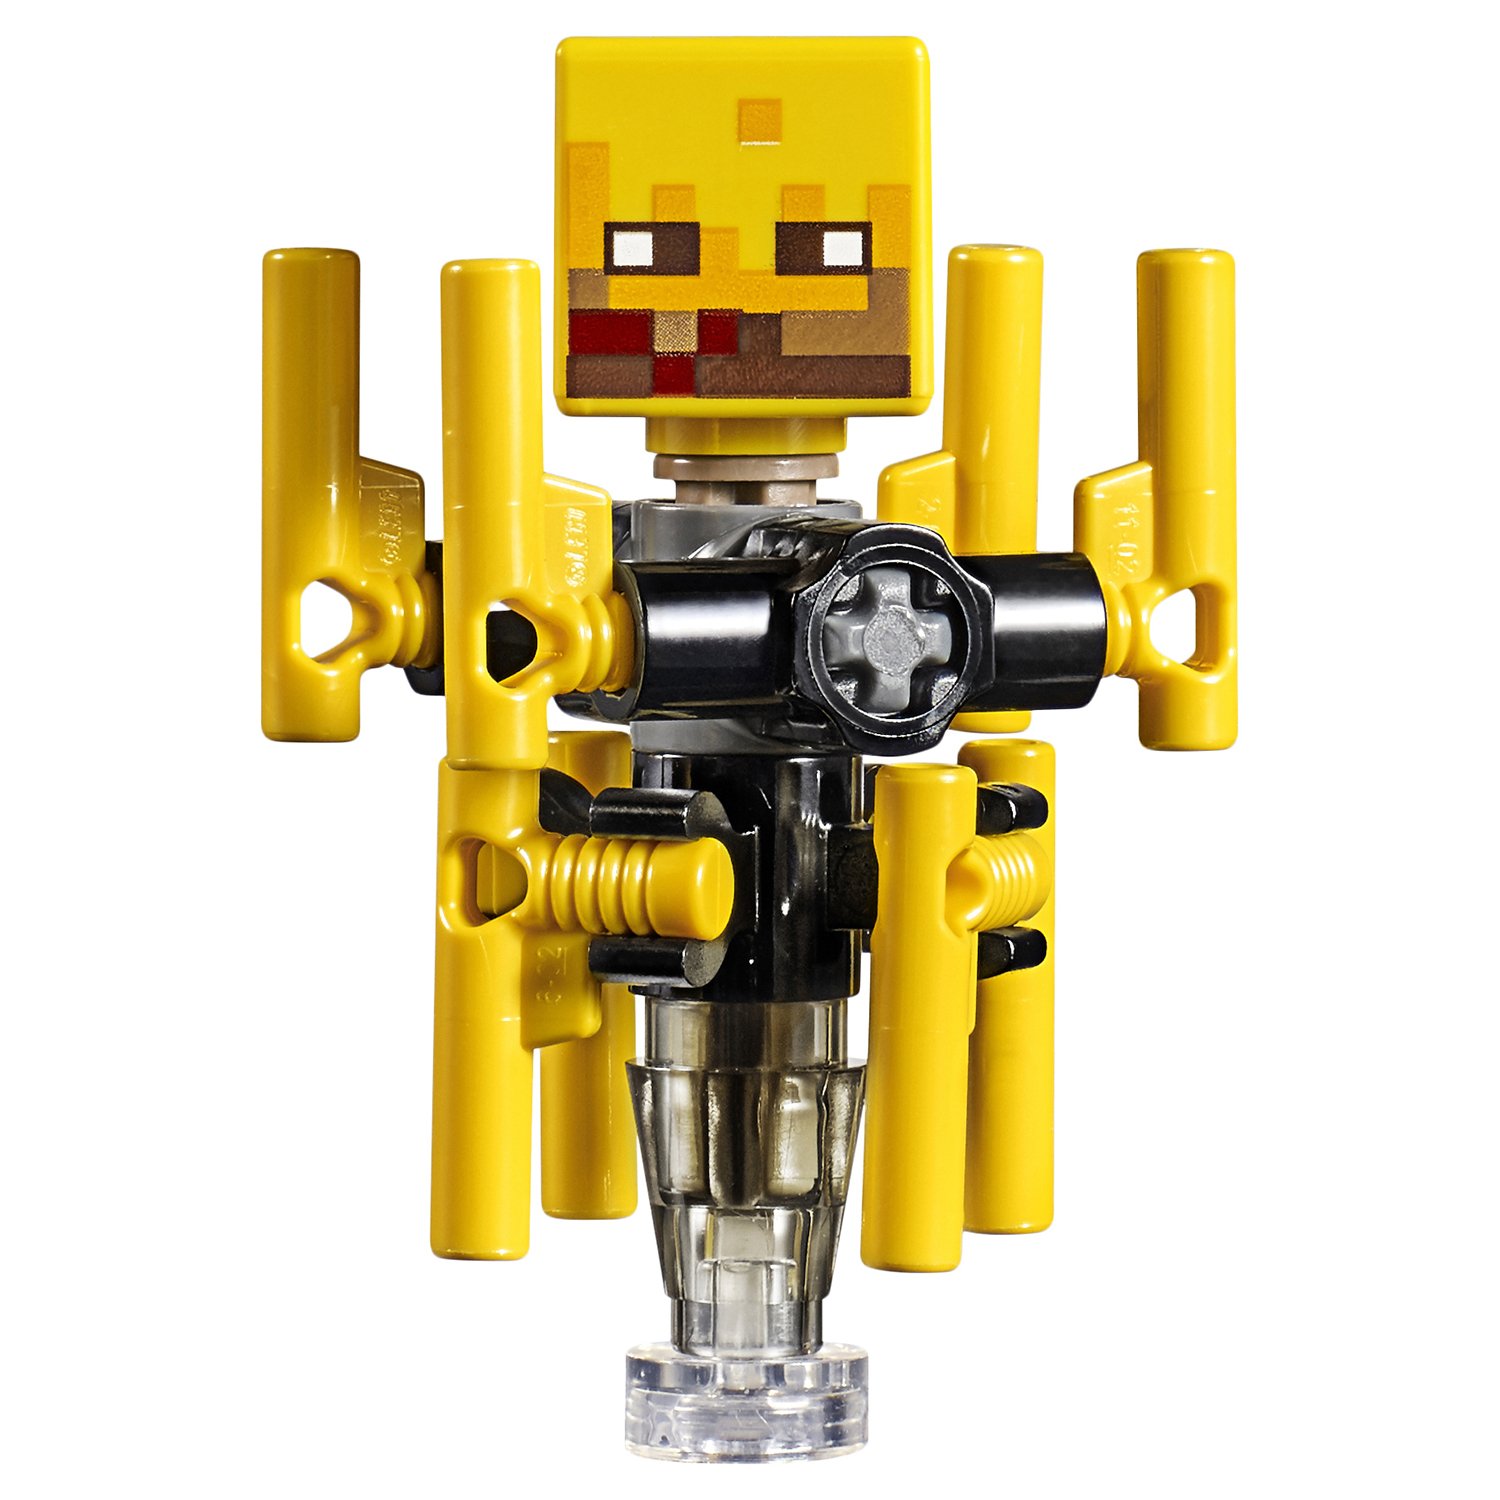 Конструктор LEGO Minecraft 21154 Мост Ифрита